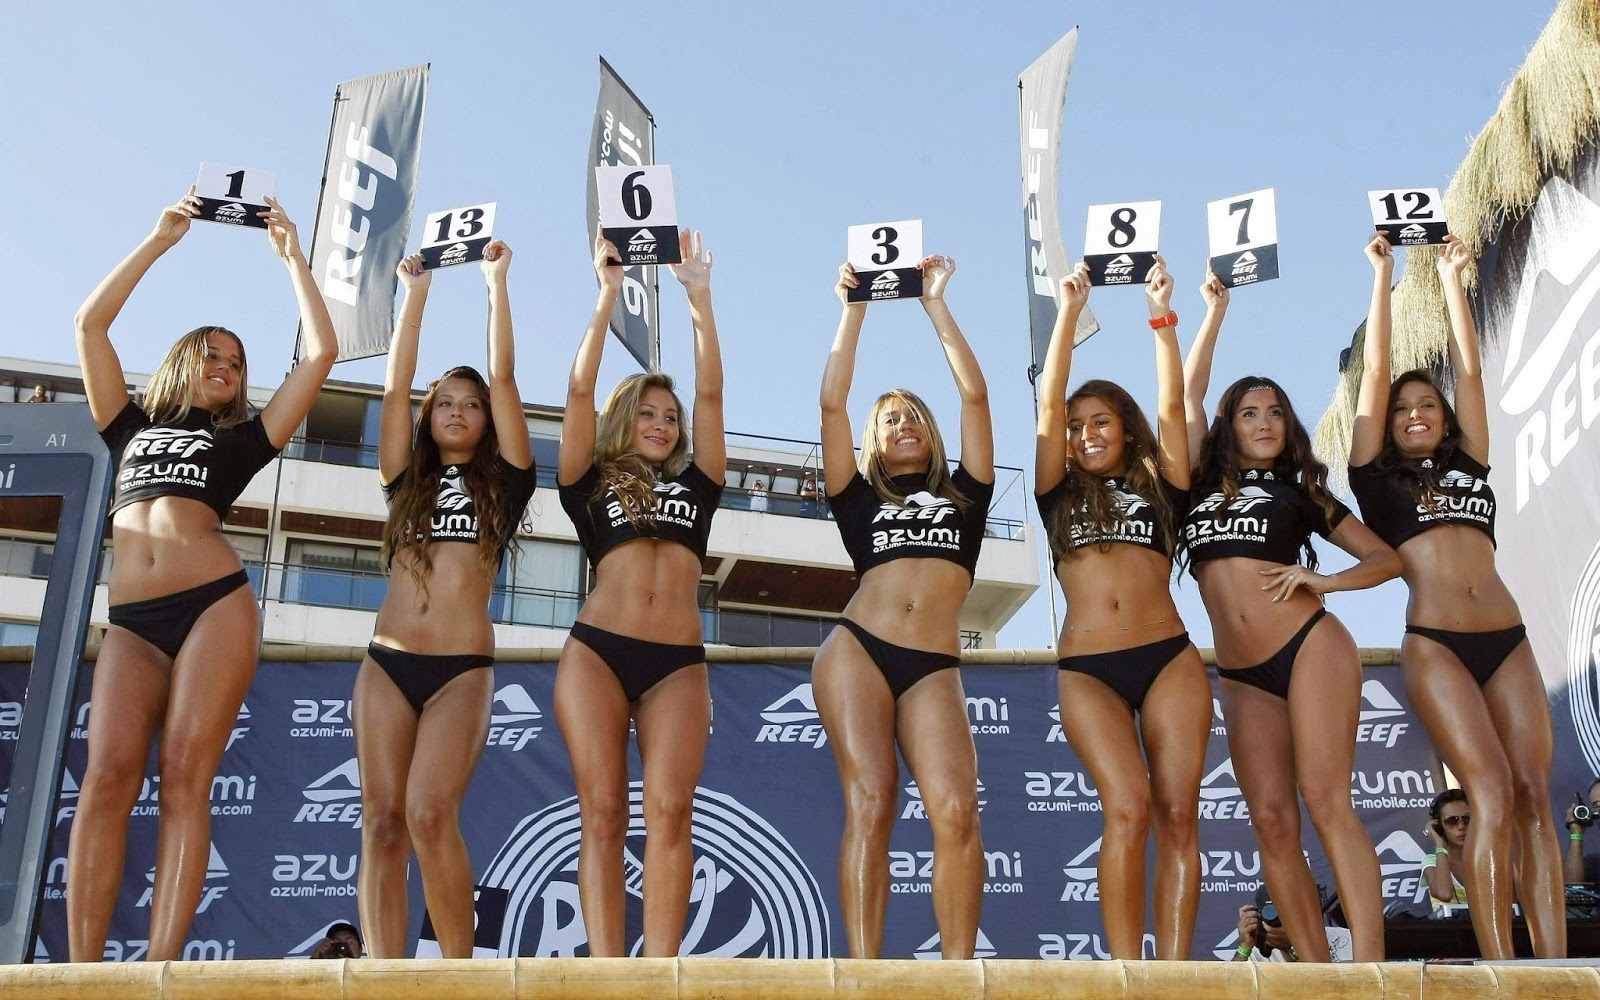 College girls at spring break bikini contests